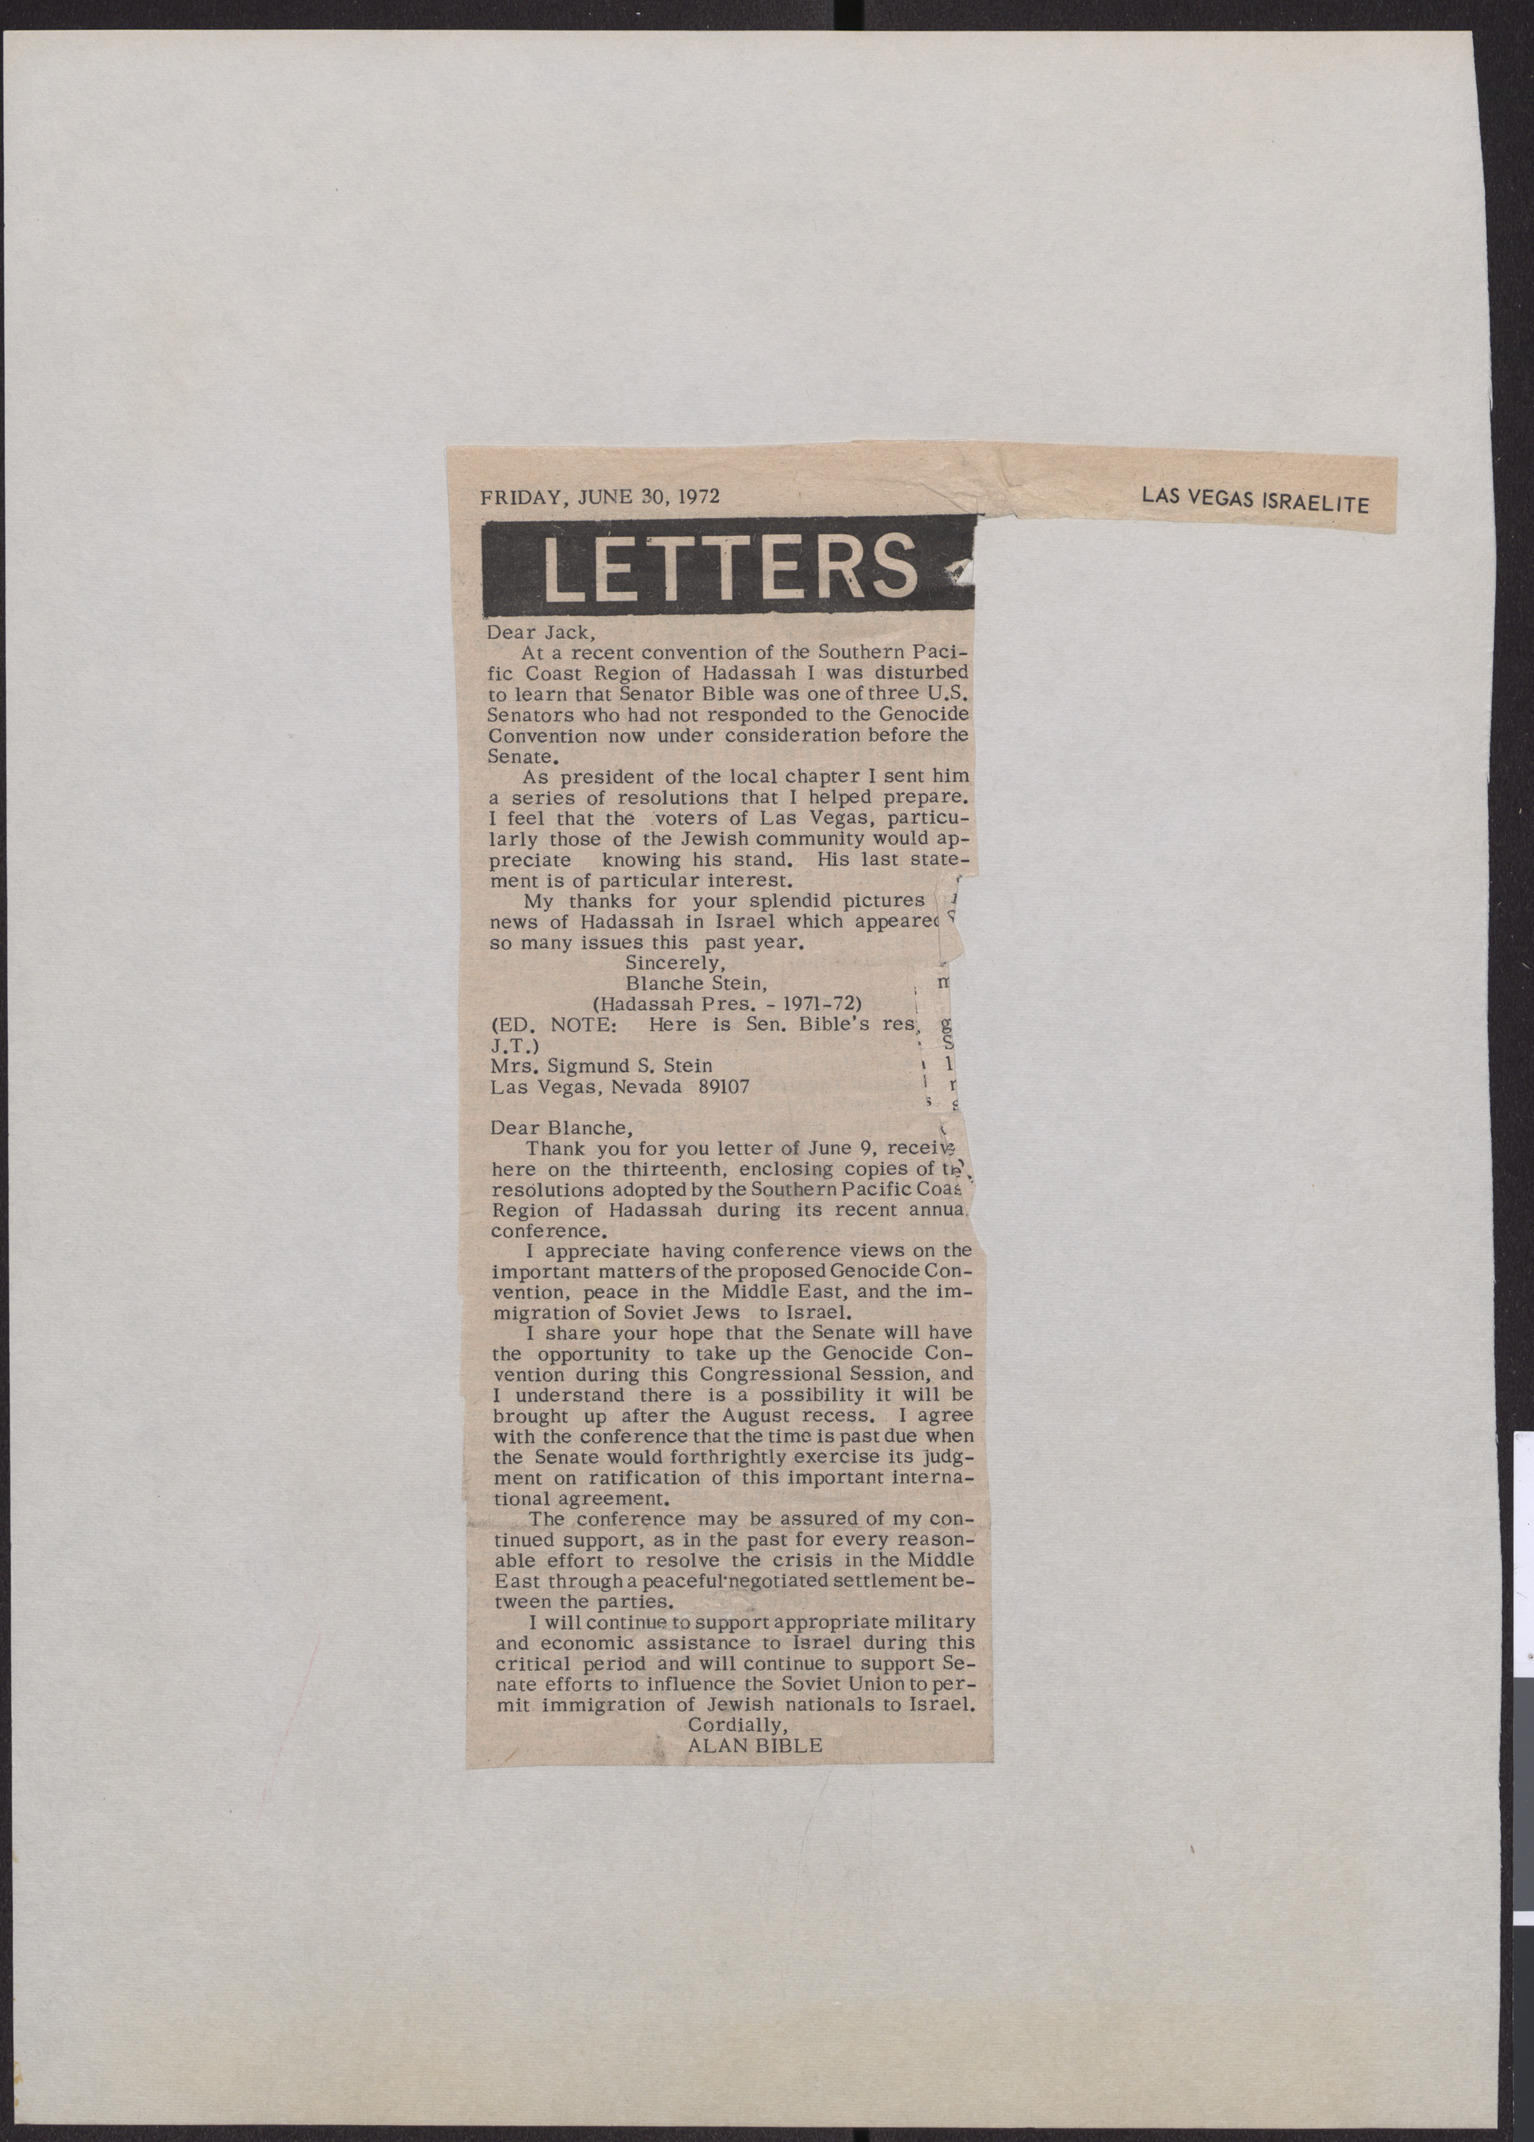 Newspaper clipping, Letter from Blanche Stein to "Jack," and letter from Alan Bible to Blanche Stein, Las Vegas Israelite, June 20, 1972